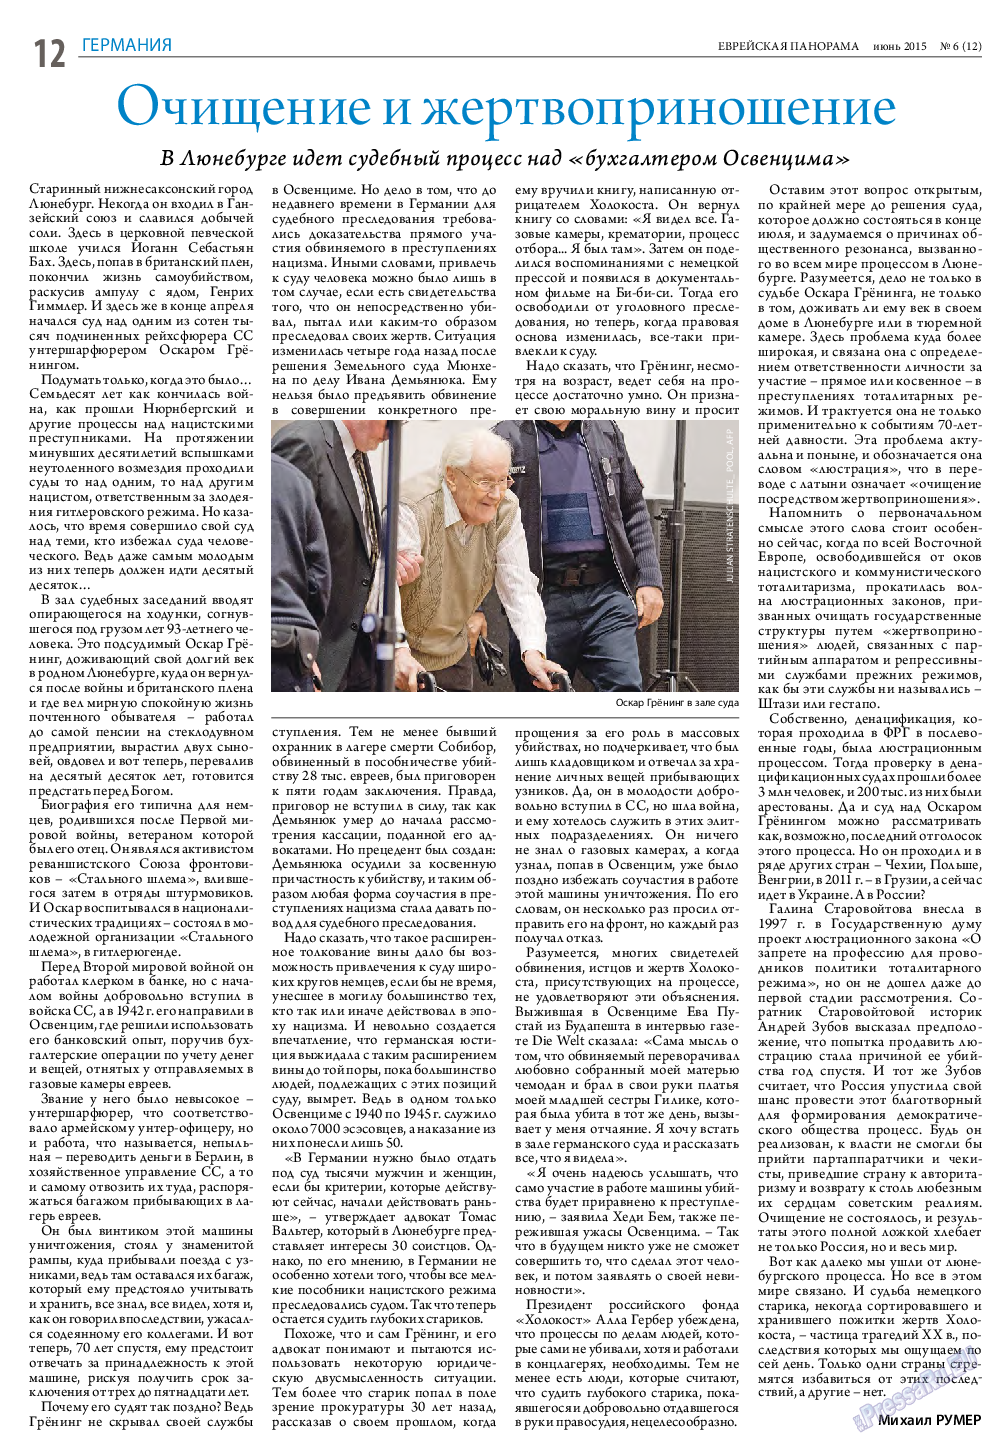 Еврейская панорама, газета. 2015 №6 стр.12